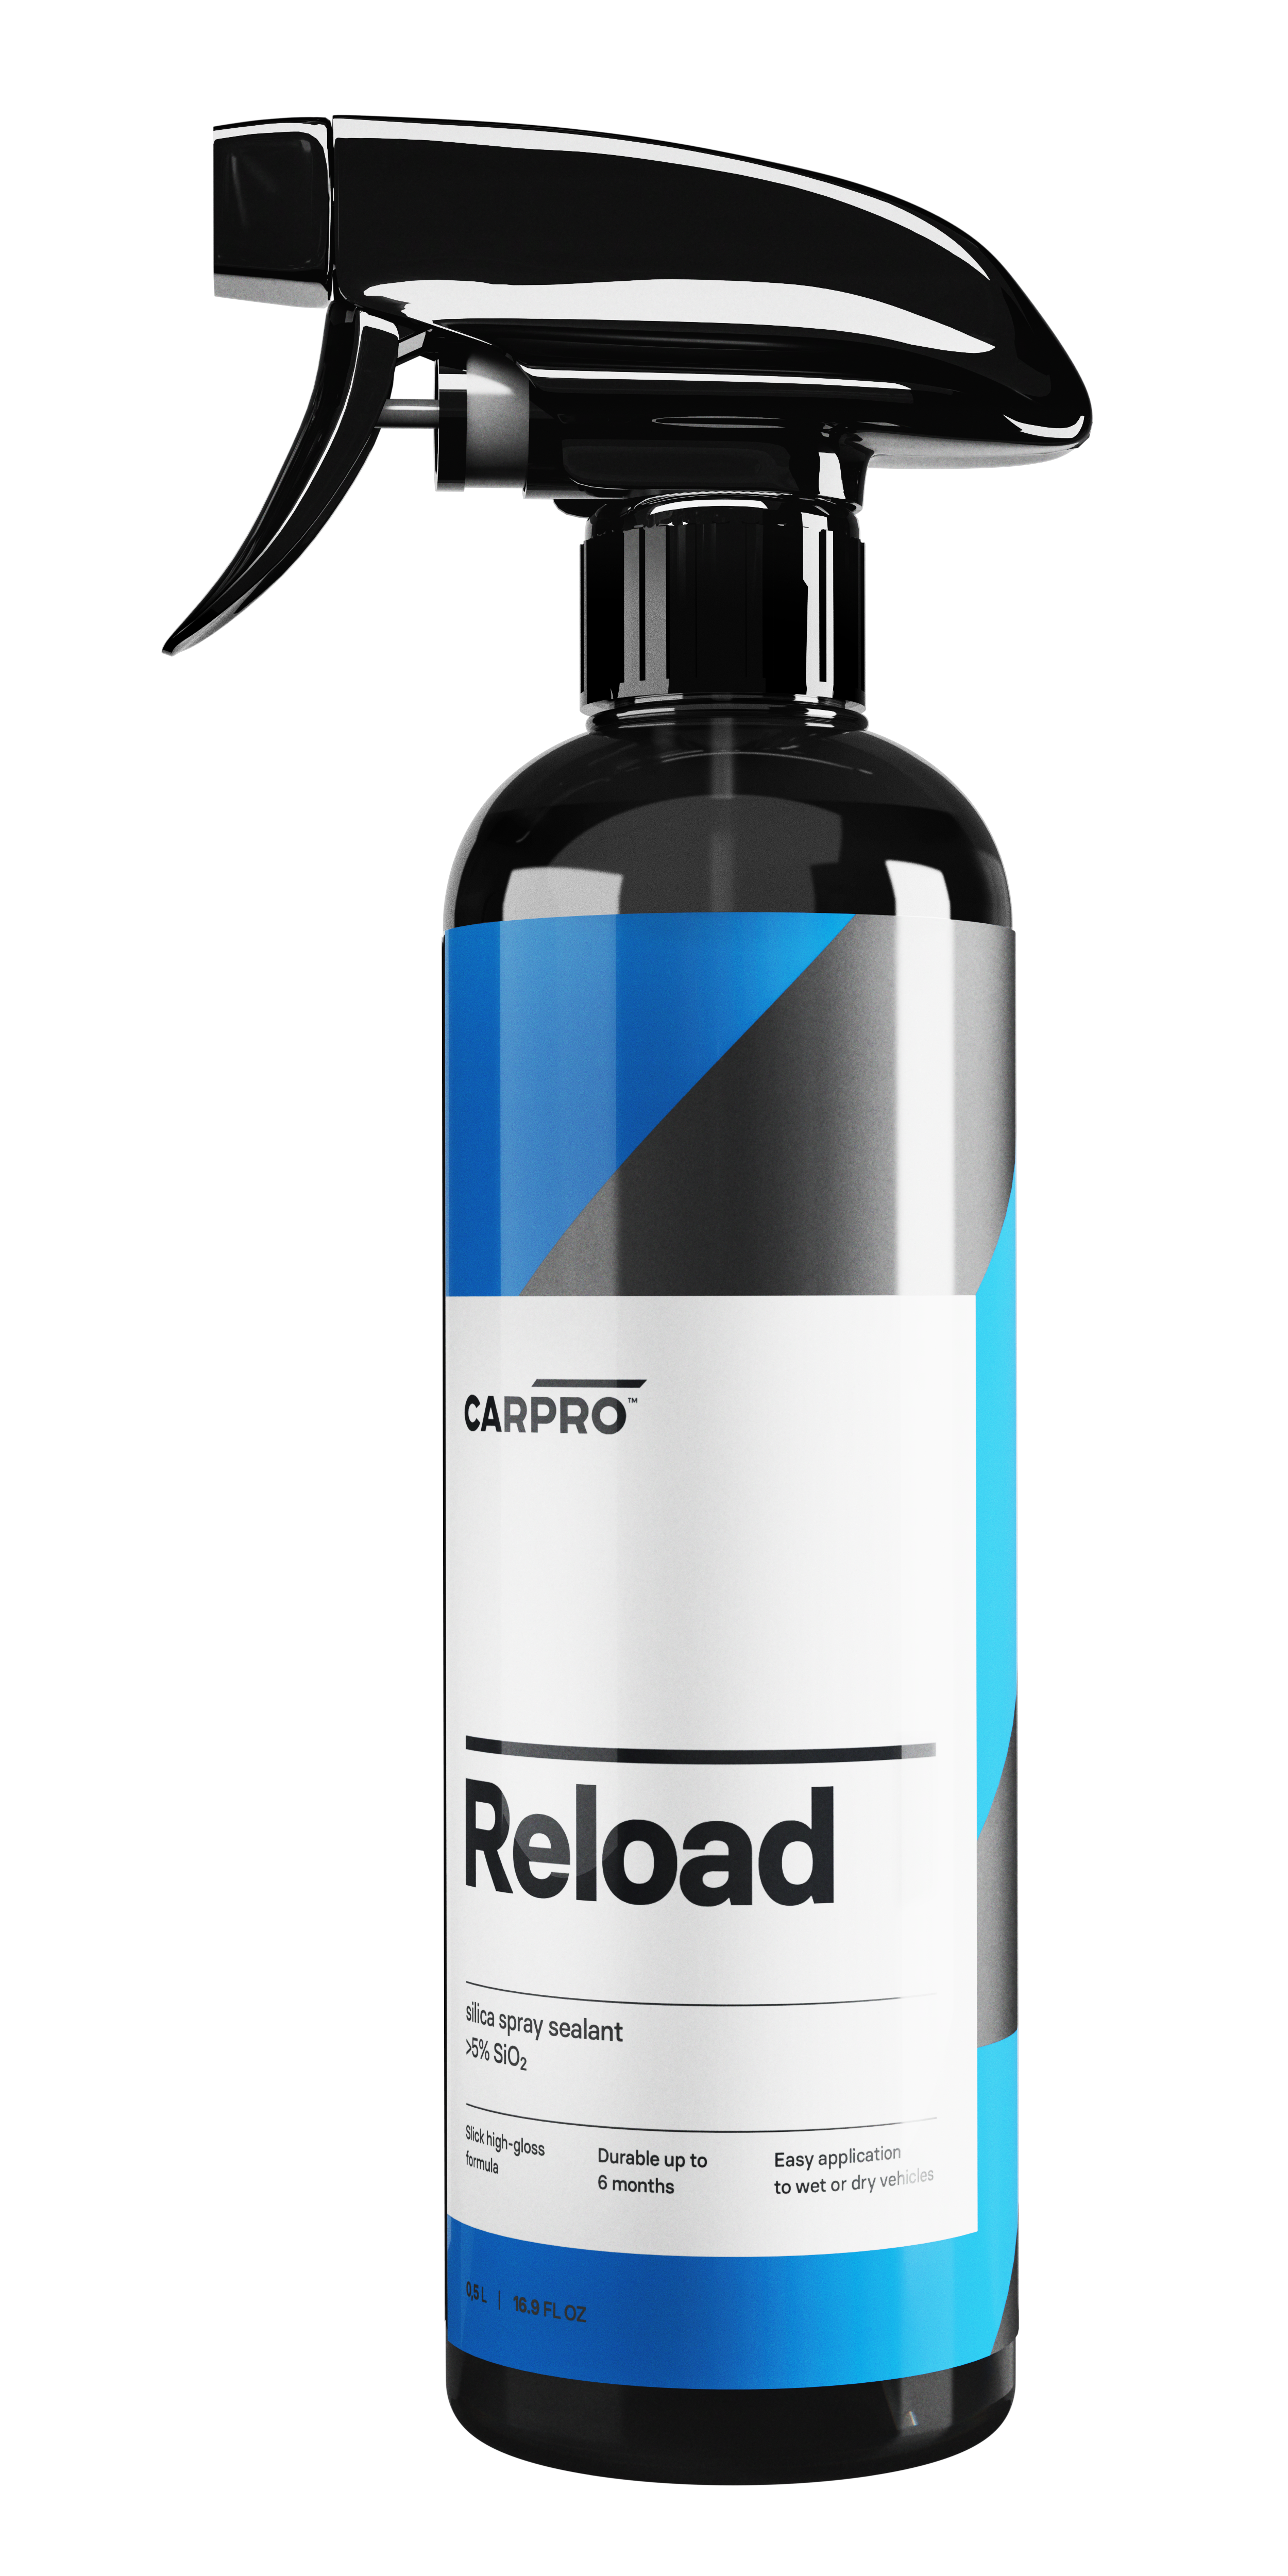 CARPRO Reload, Product